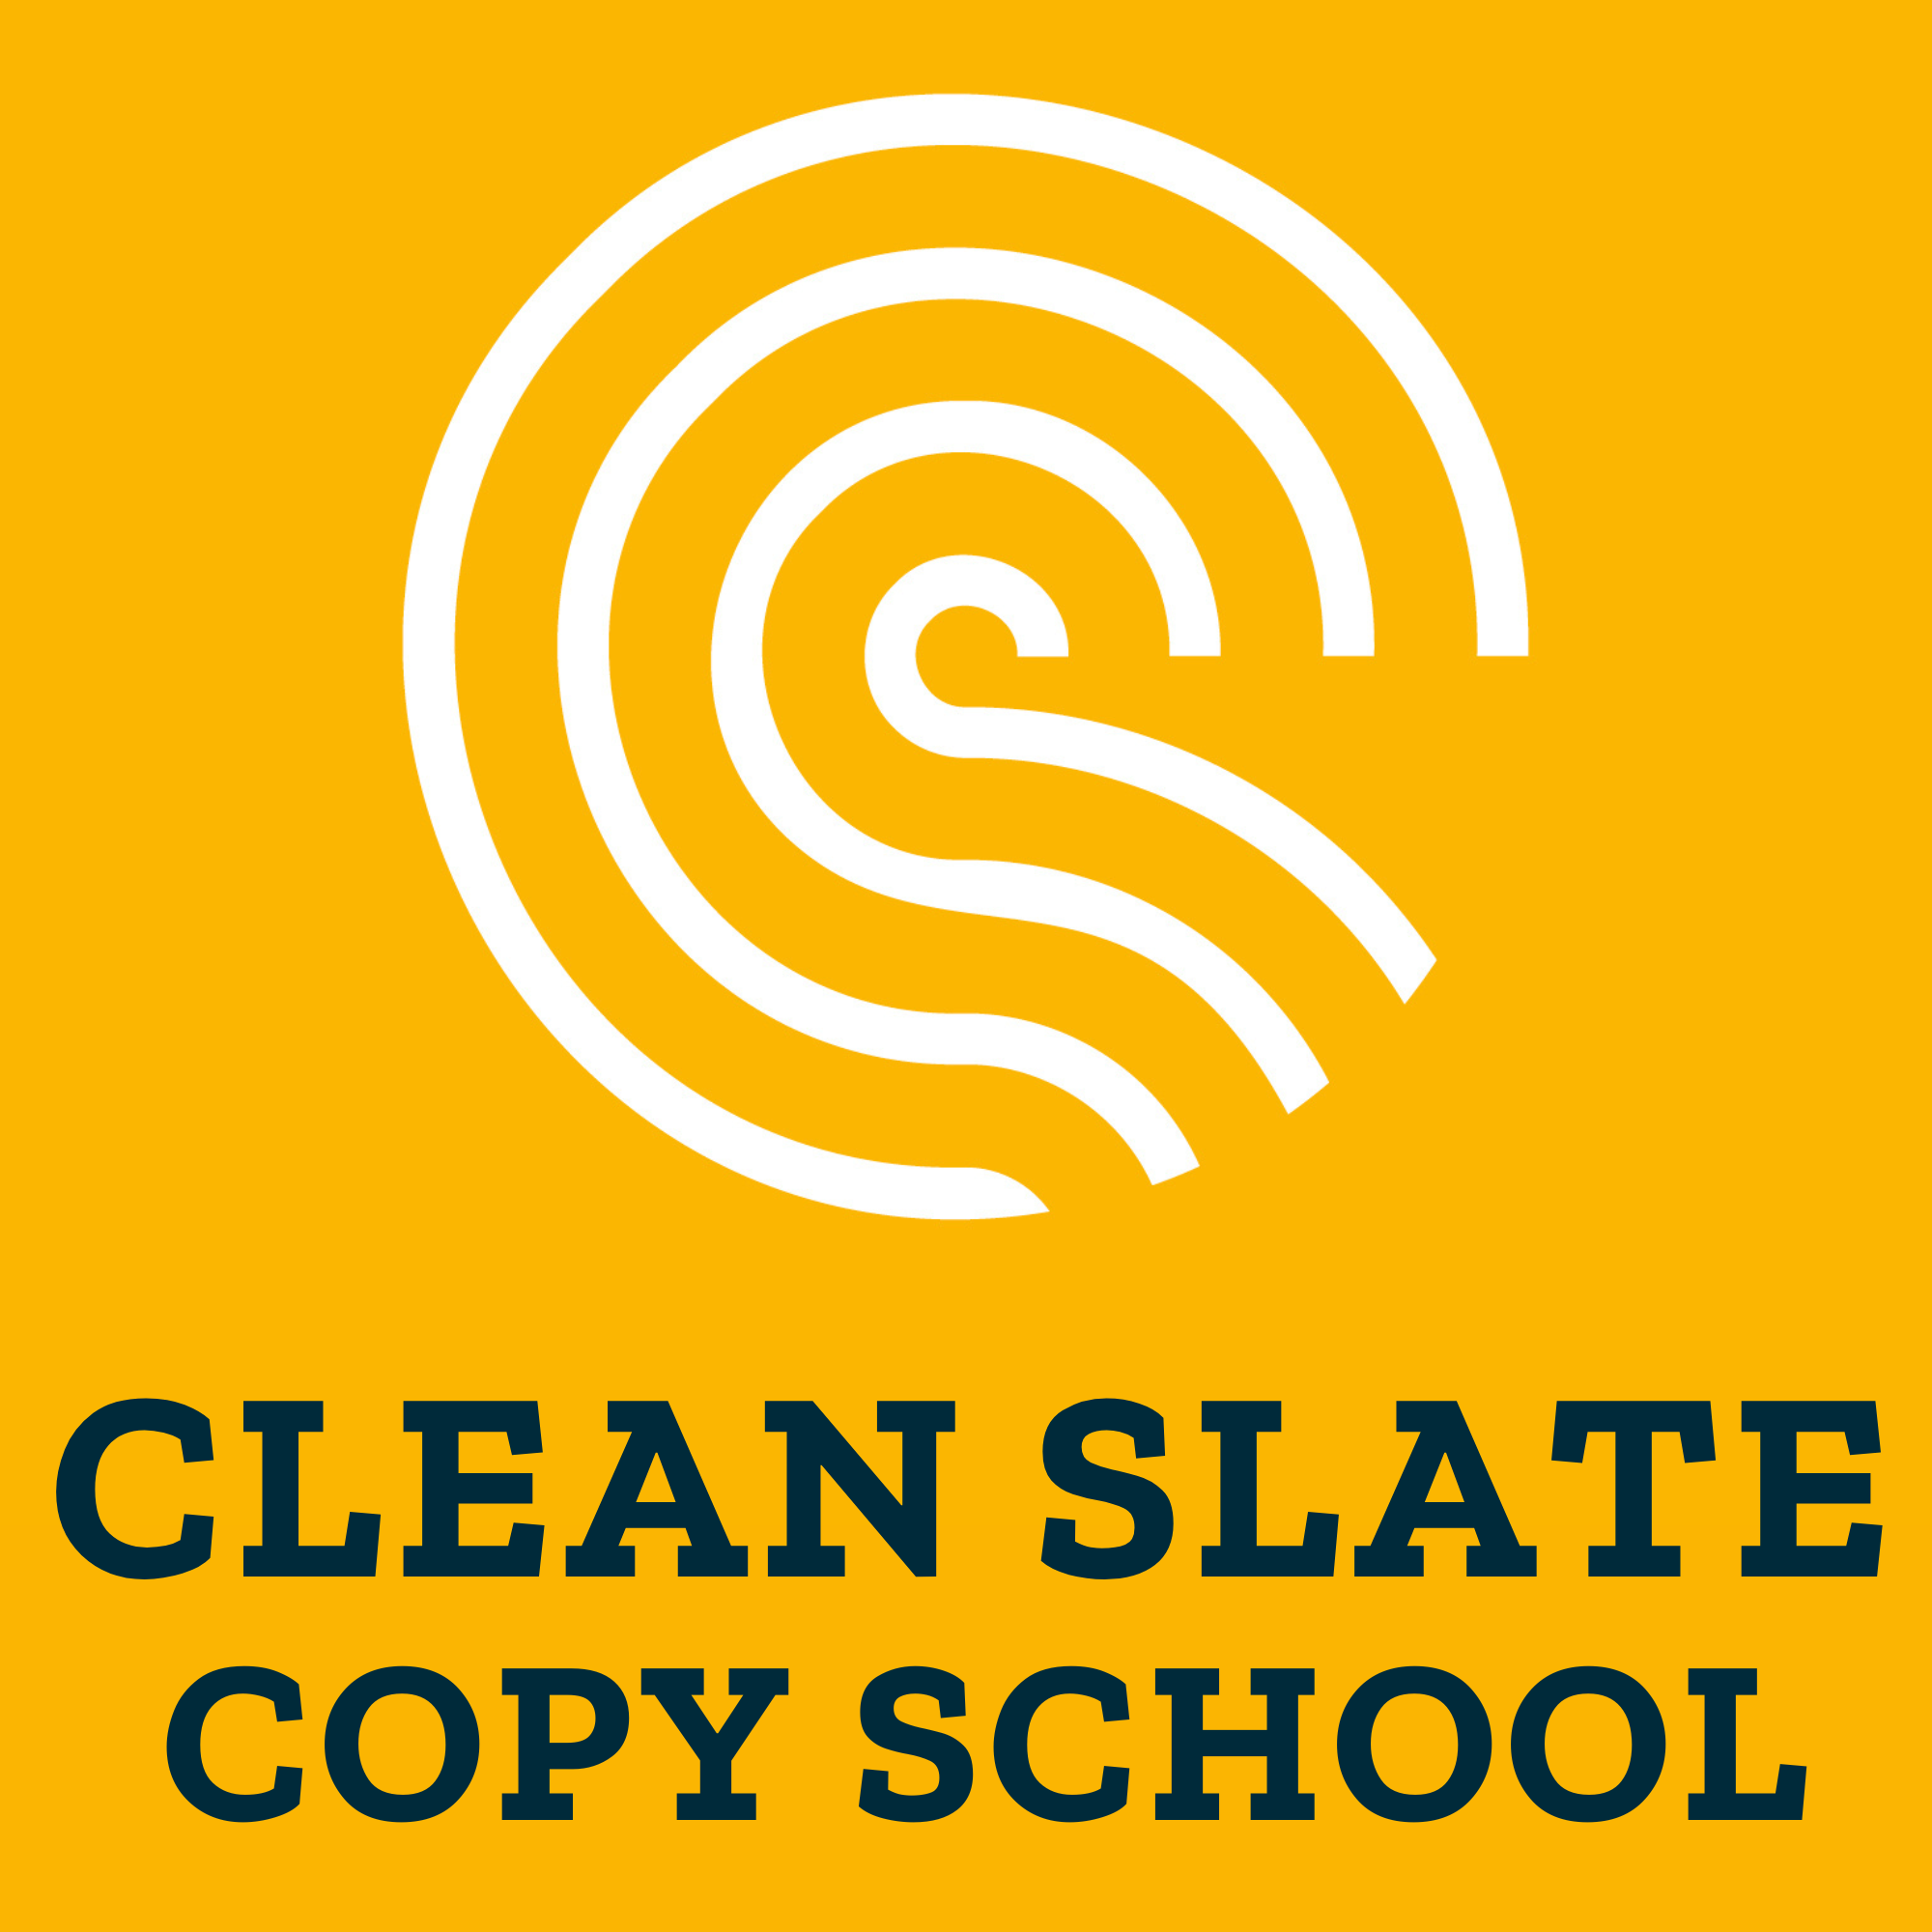 Clean Slate Copy School